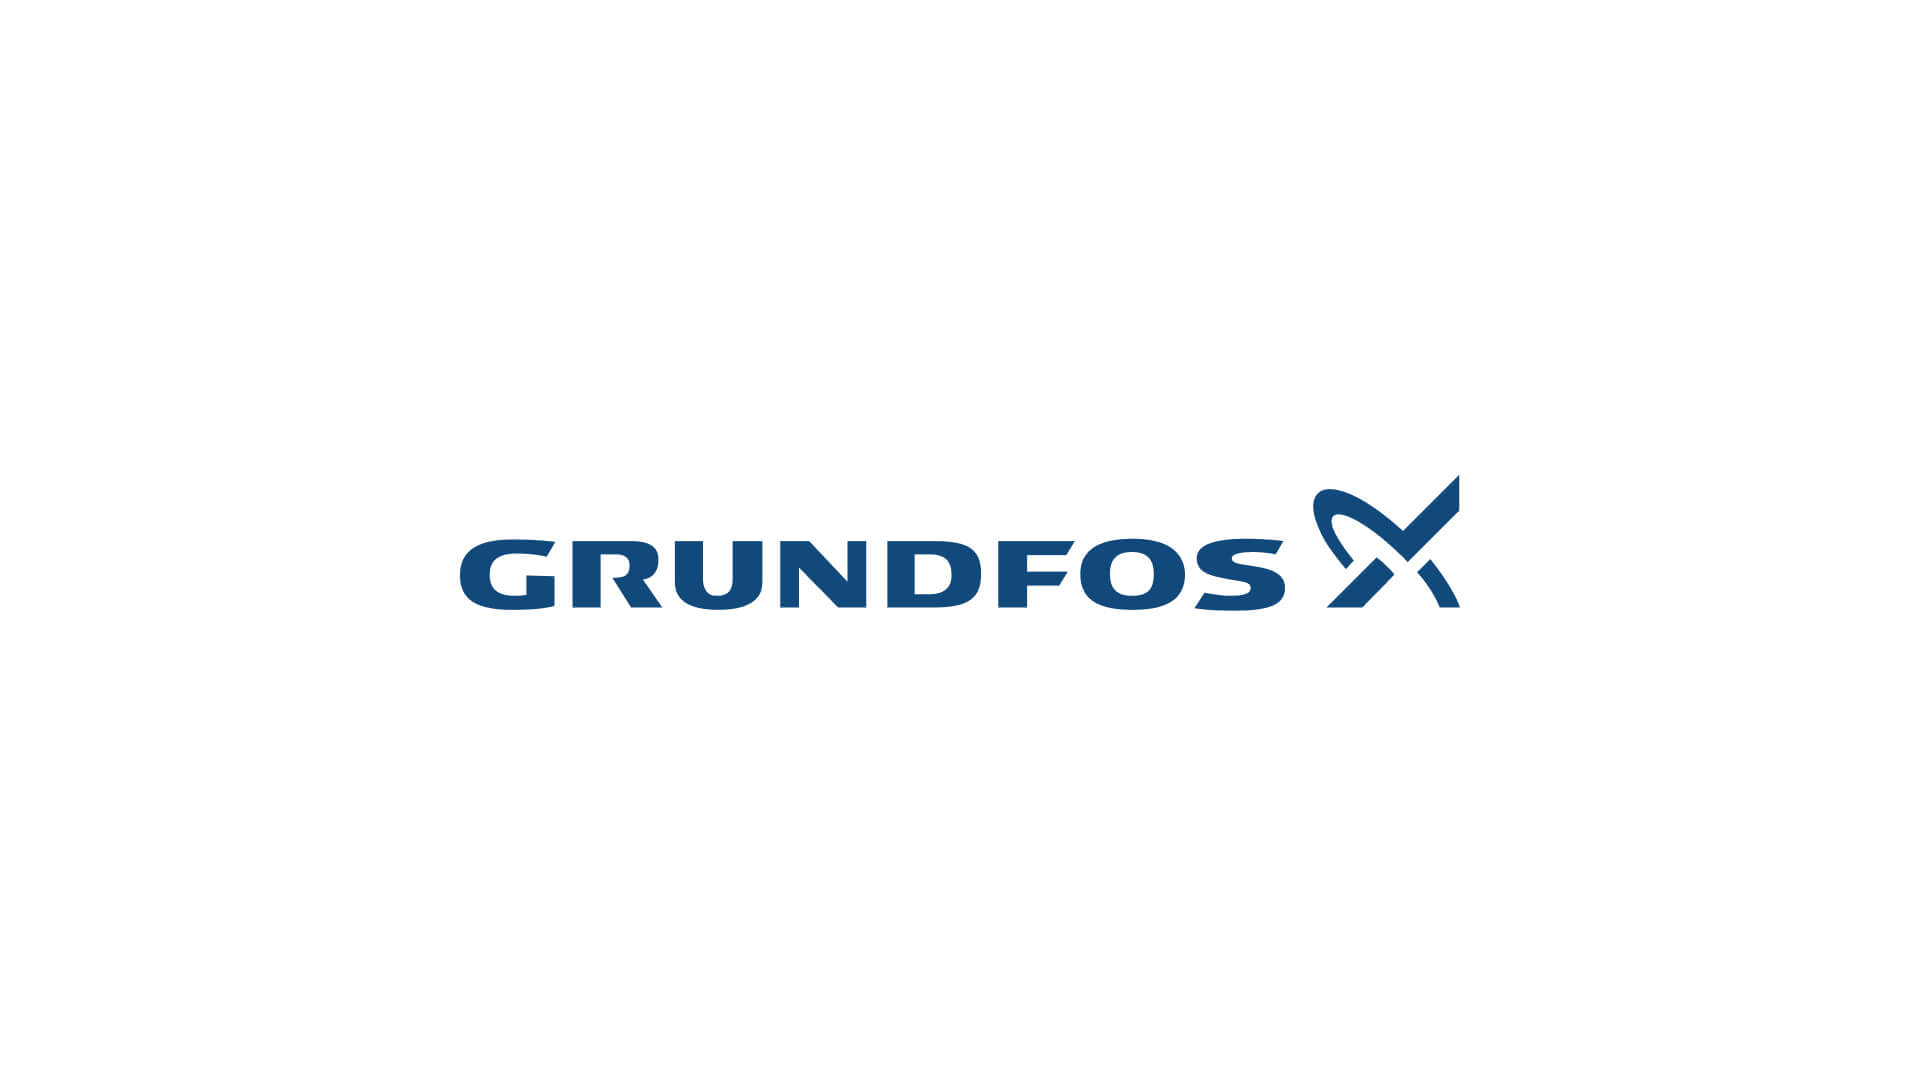 Grundfos logo in color